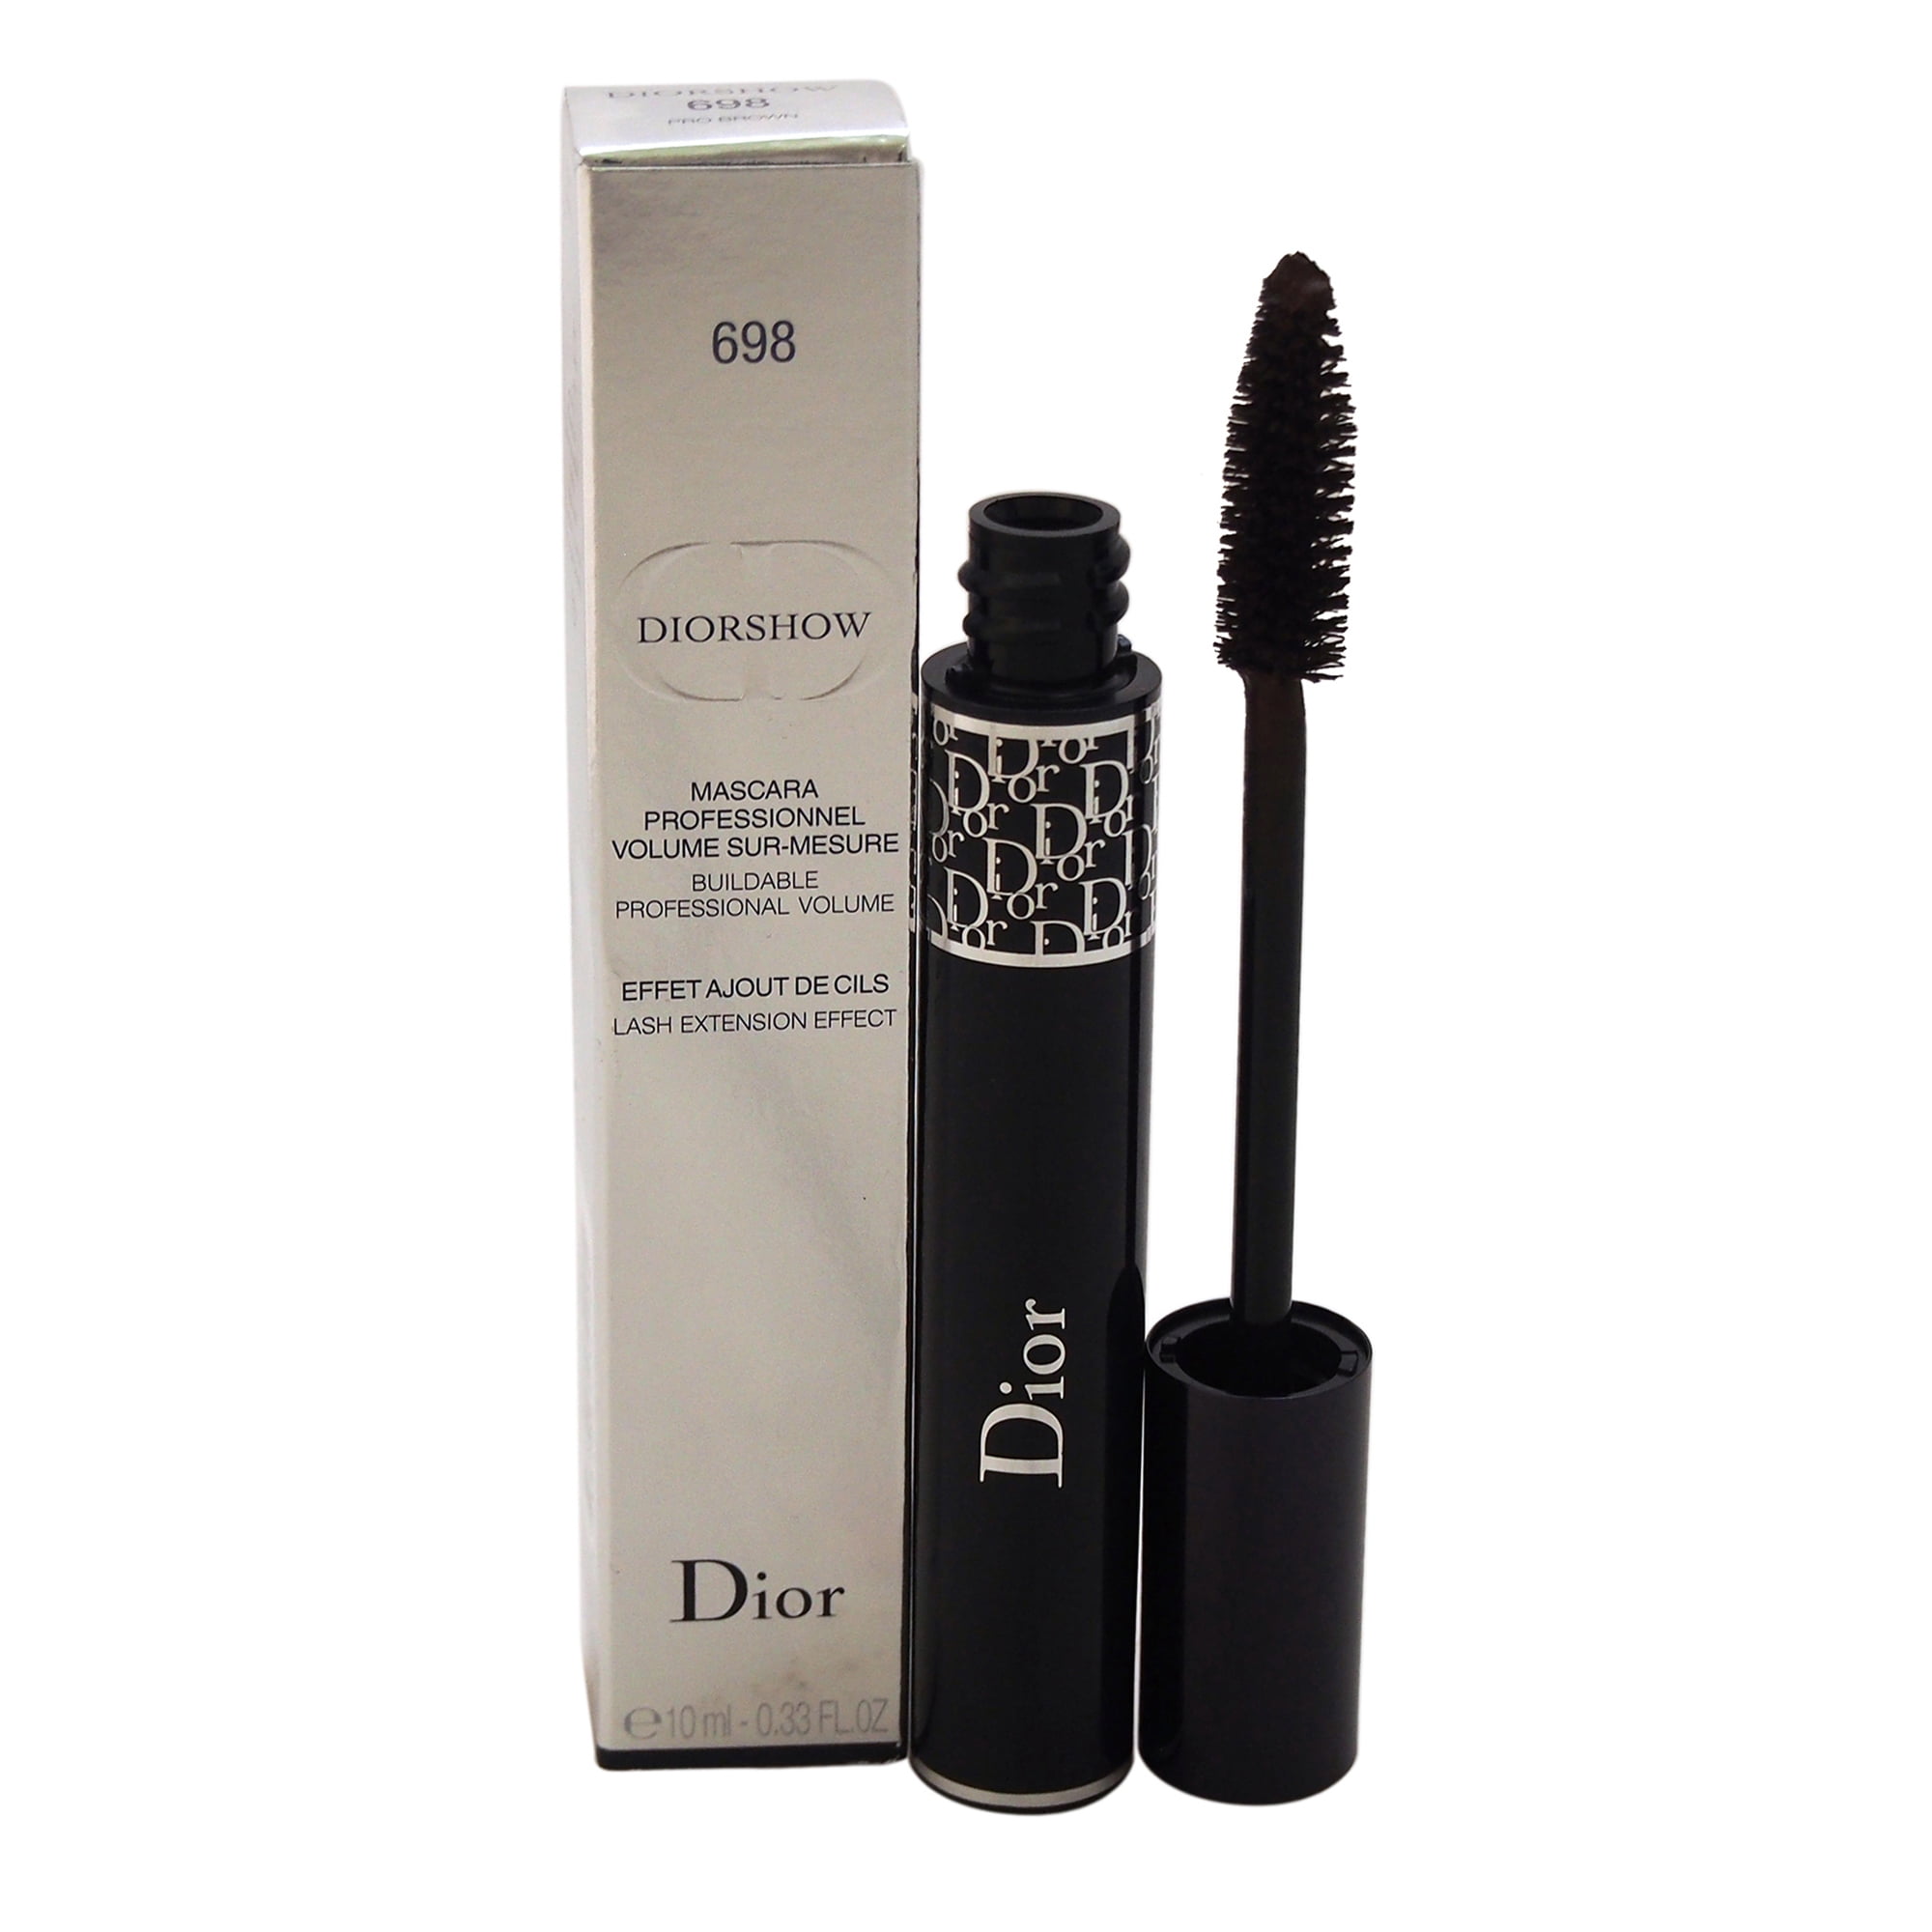 Diorshow Lash Extension Effect Volume Mascara - # 698 Pro Brown by  Christian Dior for Women - 0.33 oz Mascara